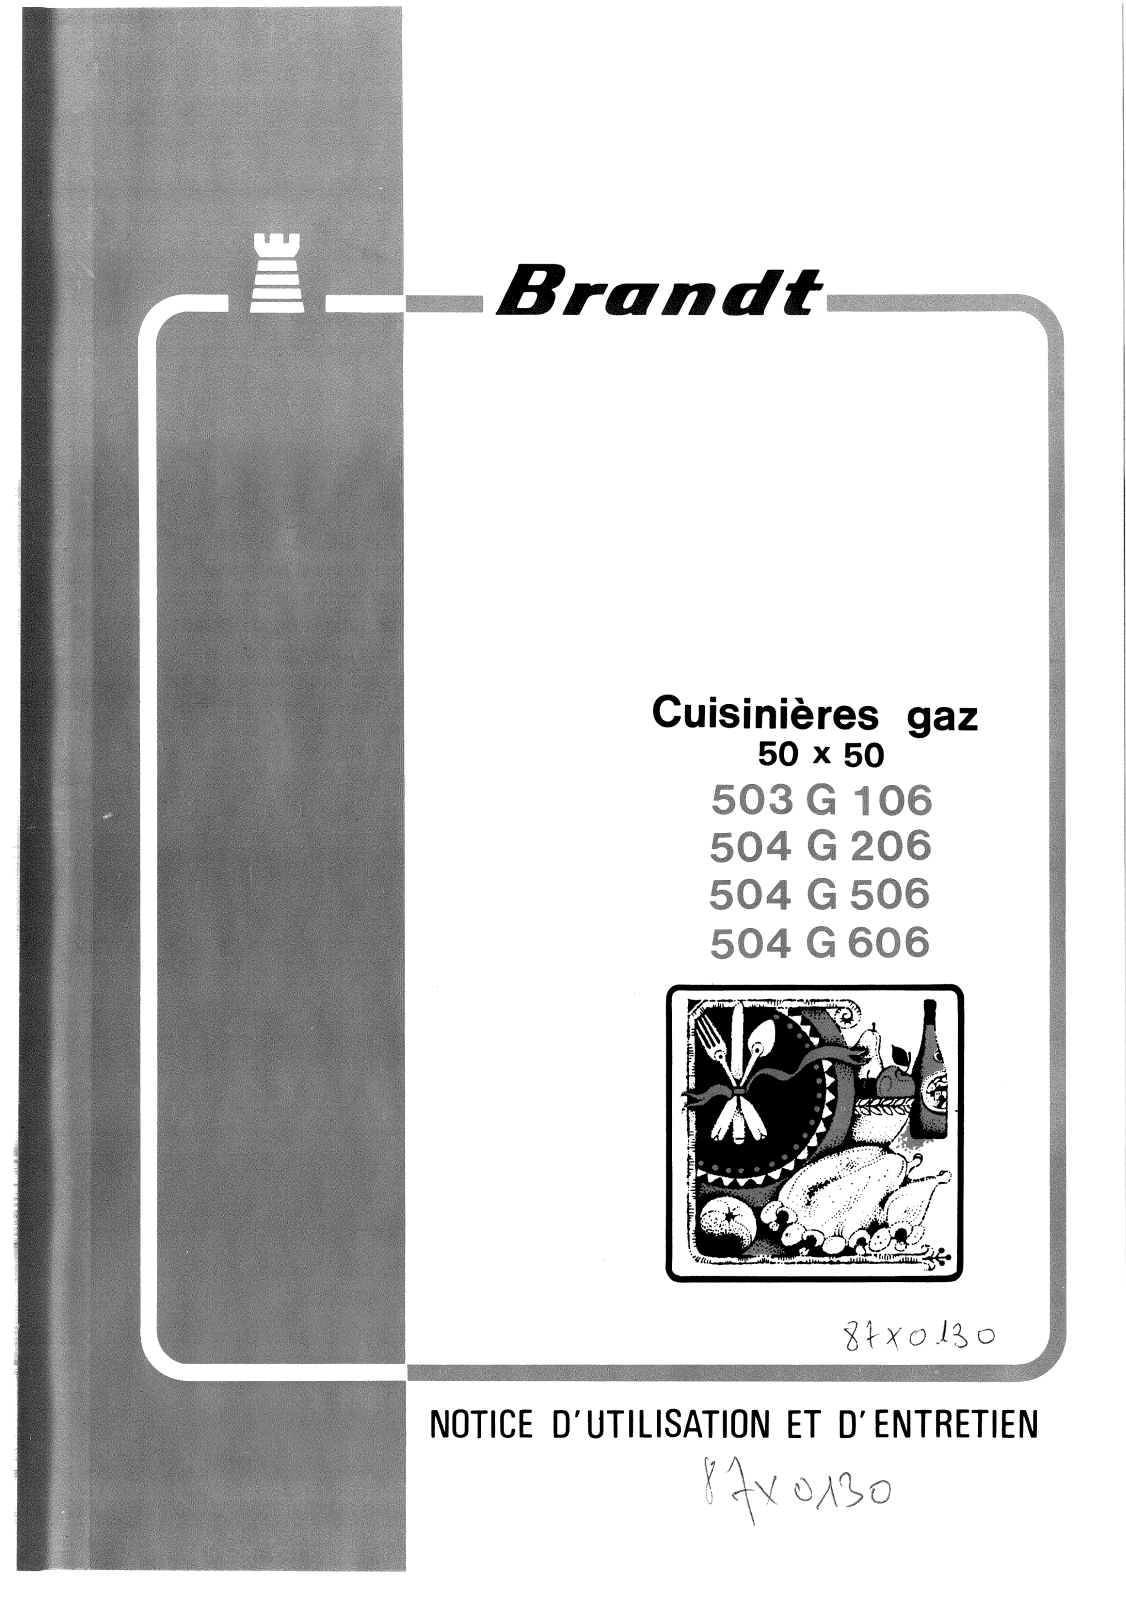 BRANDT 504G60, 504G50, 504G20, 503G10 User Manual